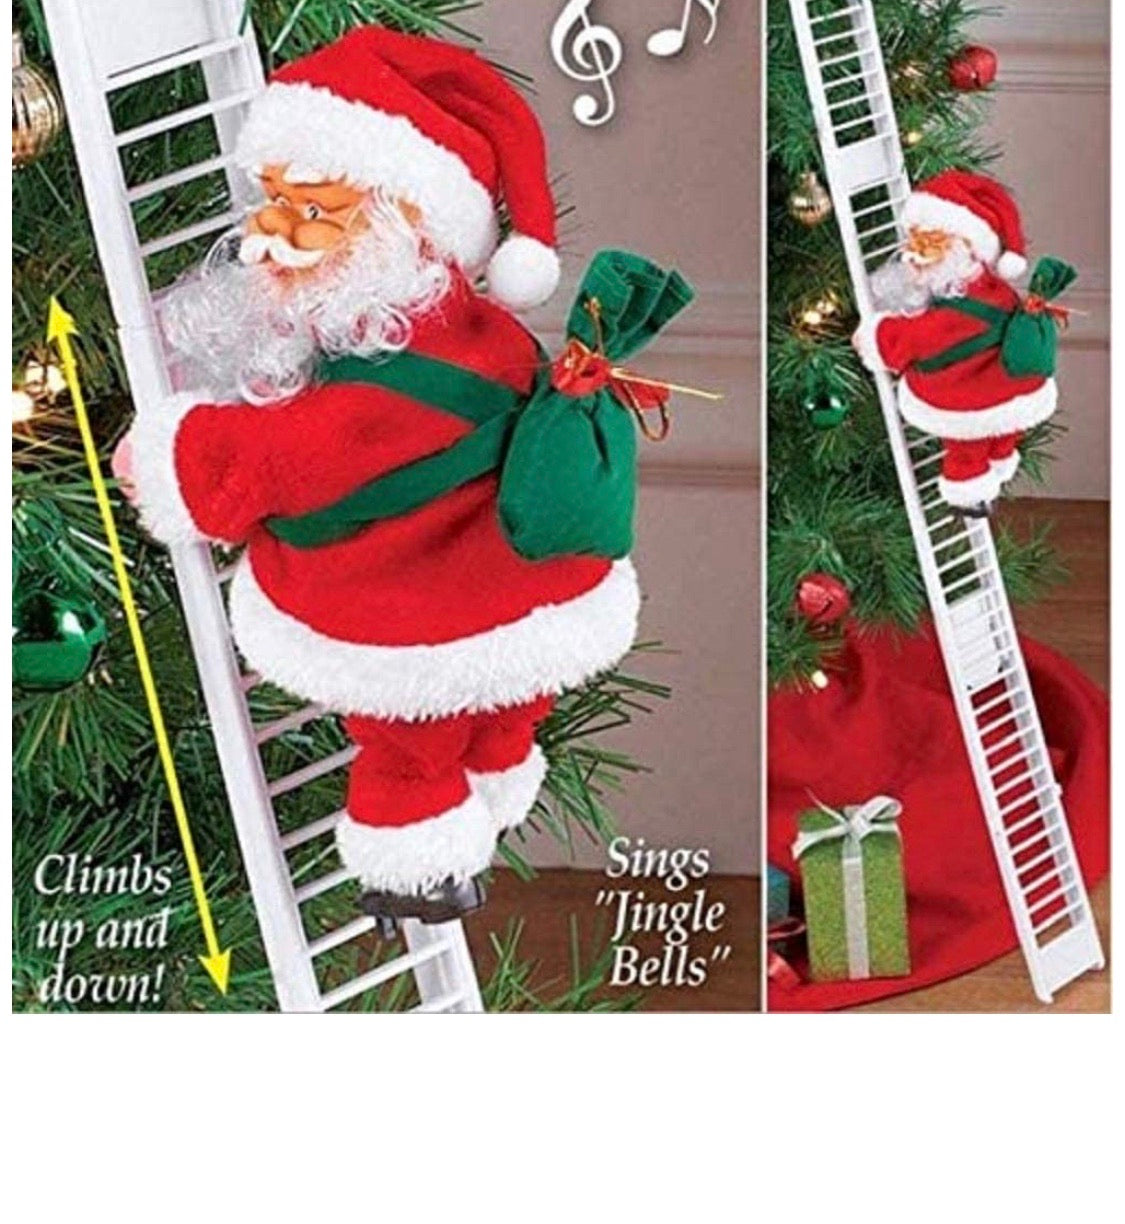 Electric Climbing ladder Santa Claus Christmas Ornament